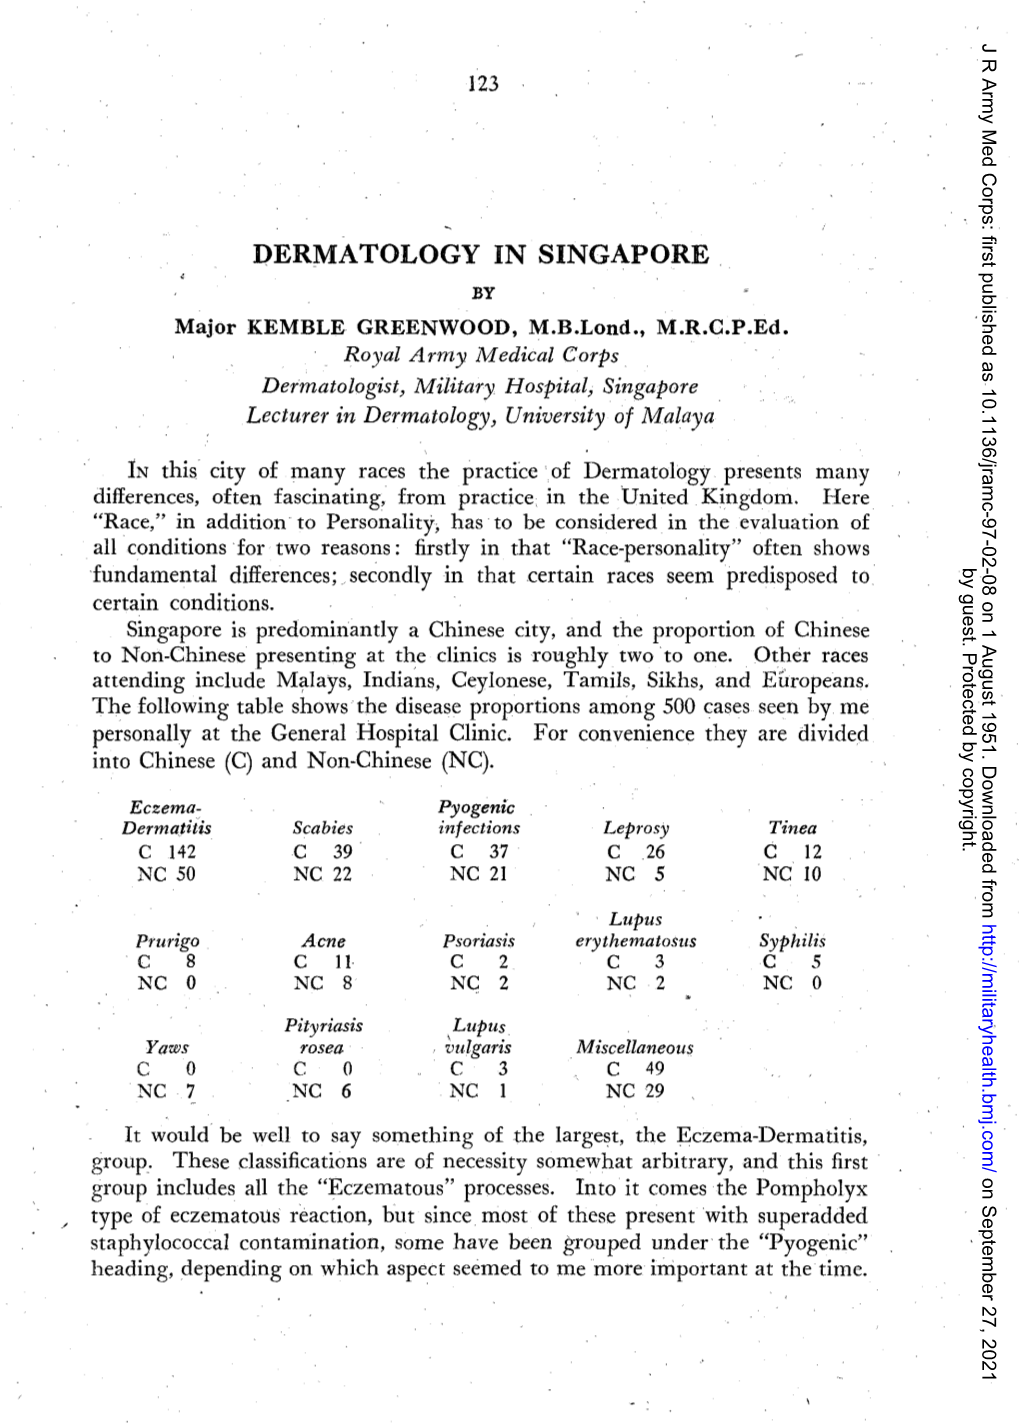 DERMATOLOGY in SINGAPORE by Major KEMBLE GREENWOOD, M.B.Lond., M.R.C.P.Ed